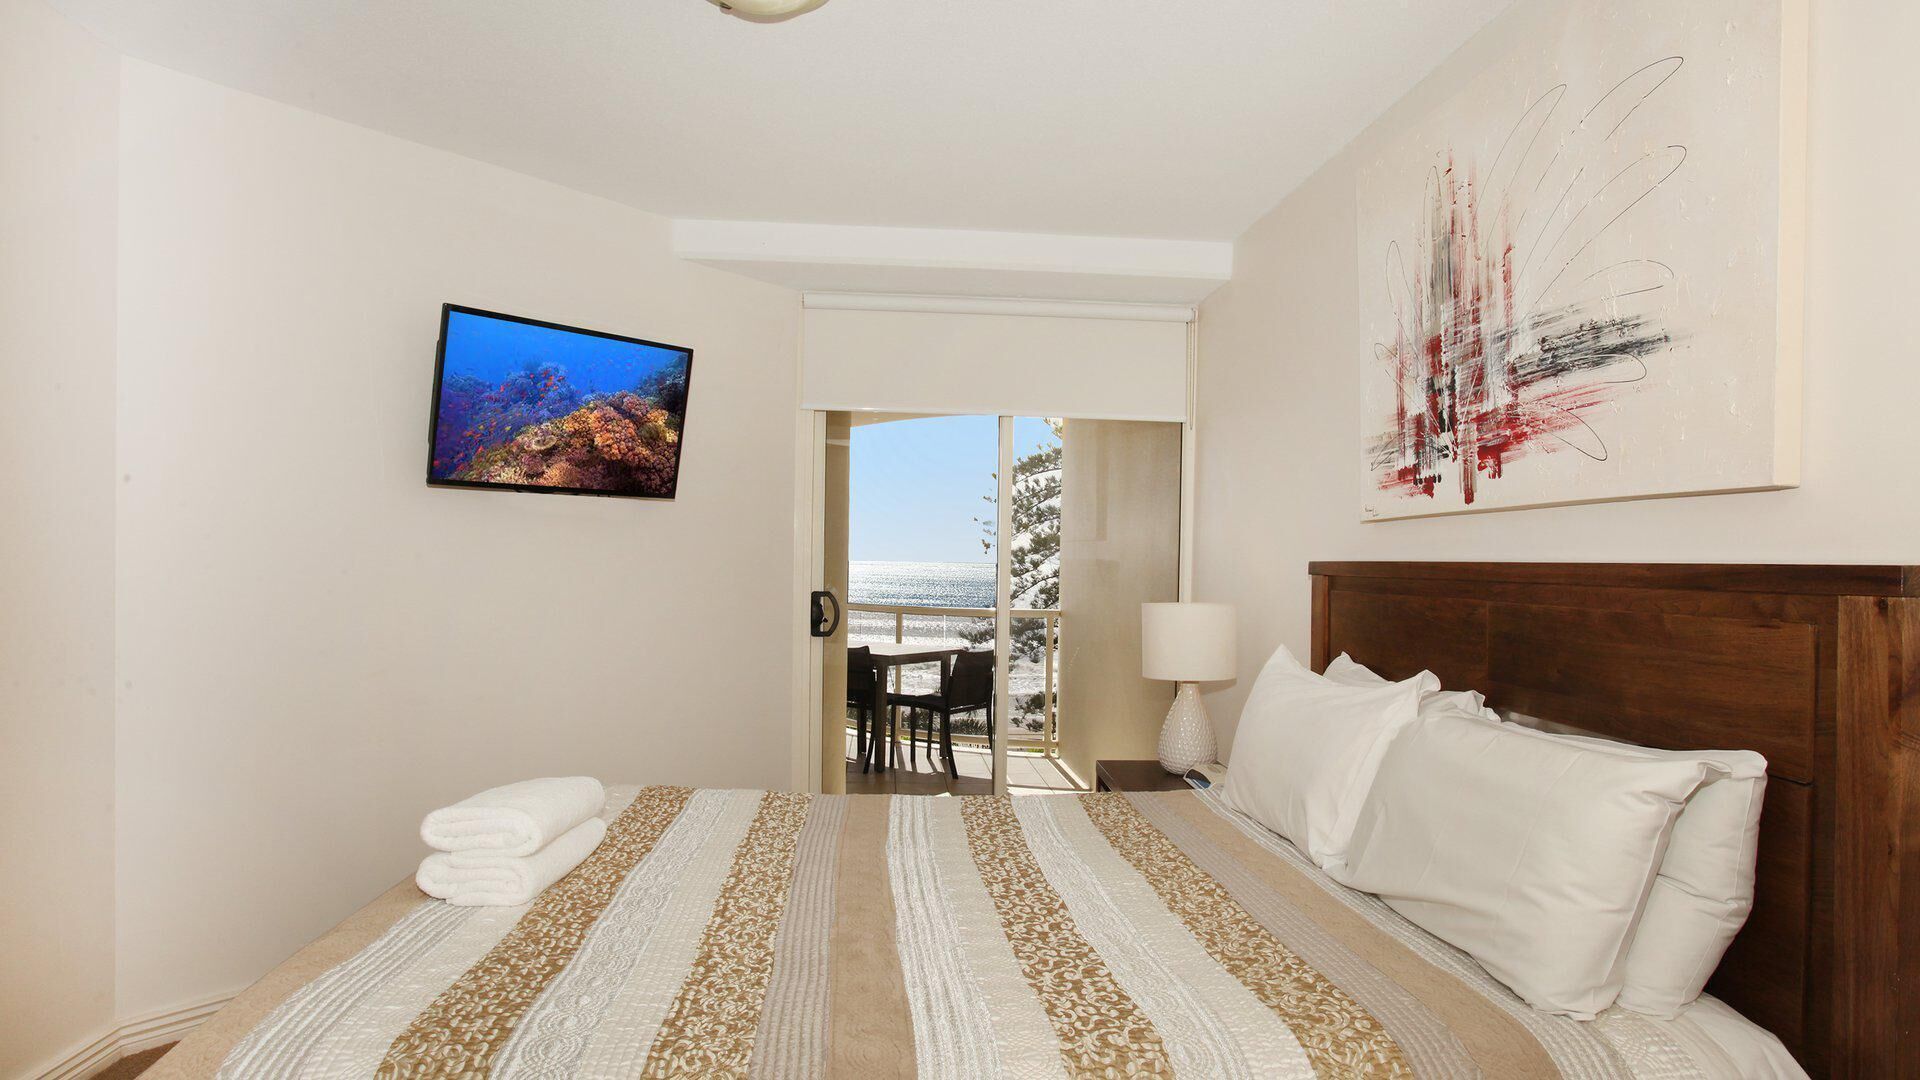 Zanzibar 404 - To Bedroom newly renovated Unit in Resort along Mooloolaba ESplanade